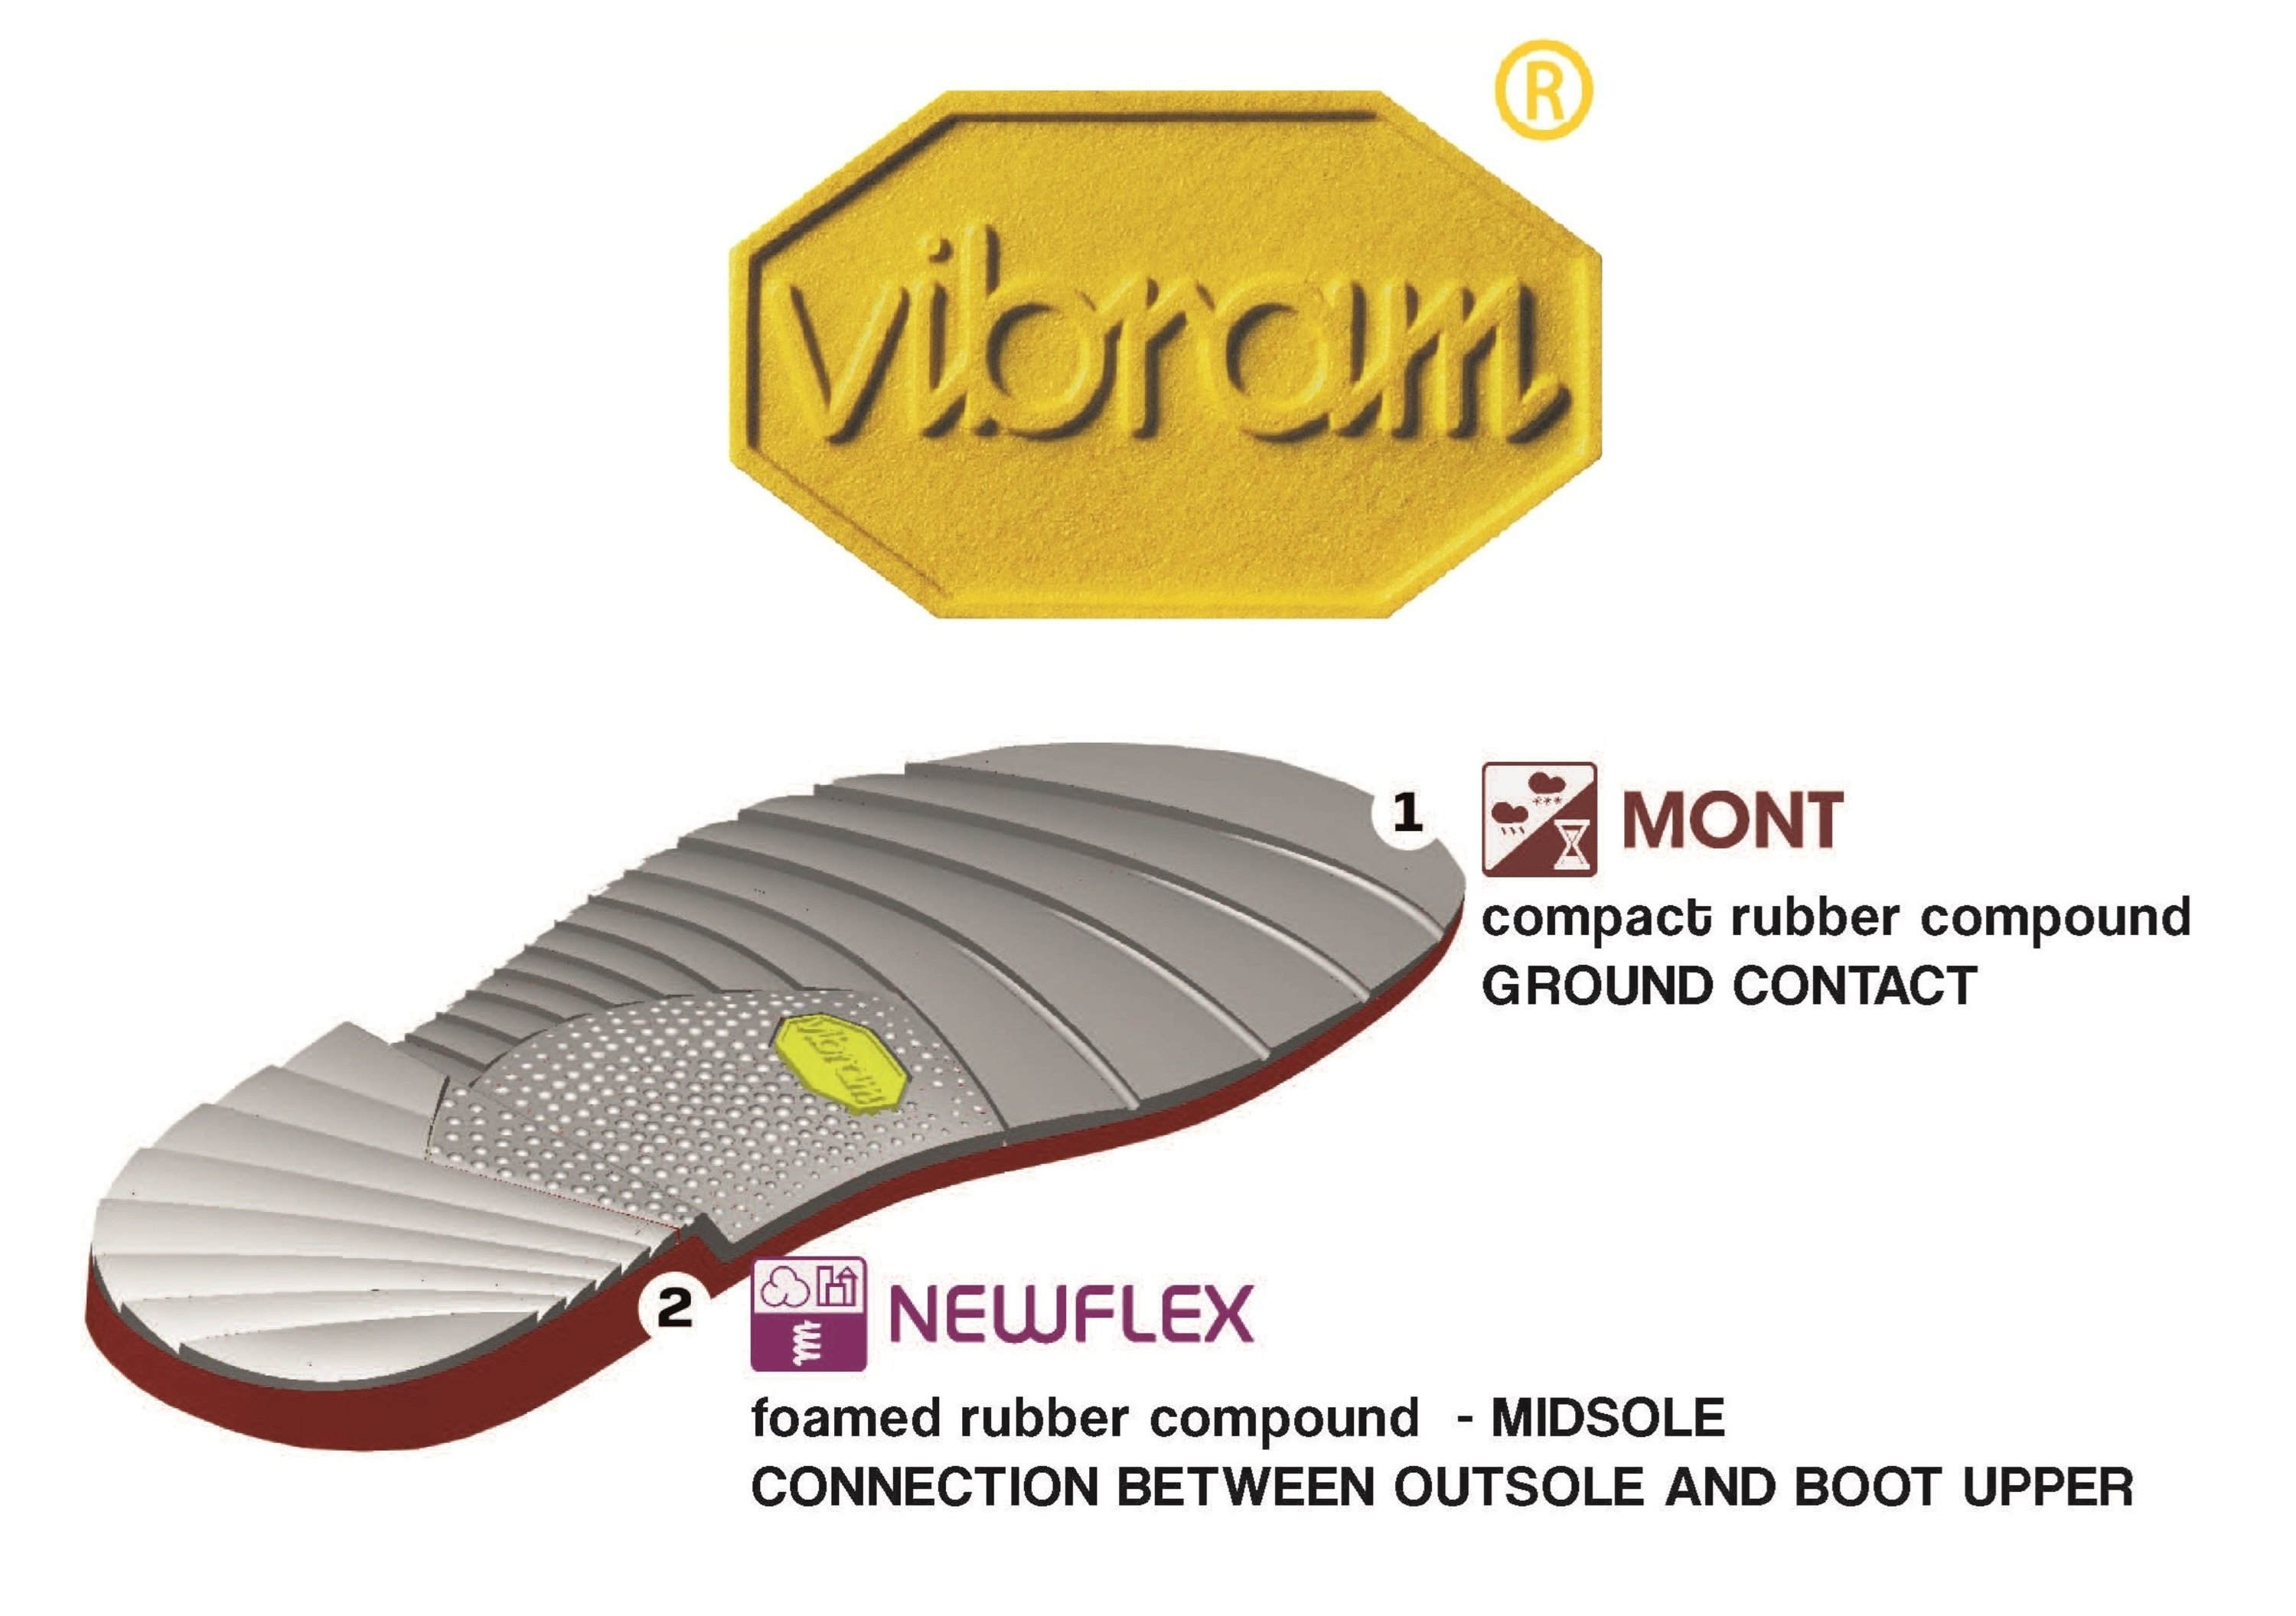 Vibram VLR Tech, per stivali pi&ugrave; leggeri e con pi&ugrave; grip